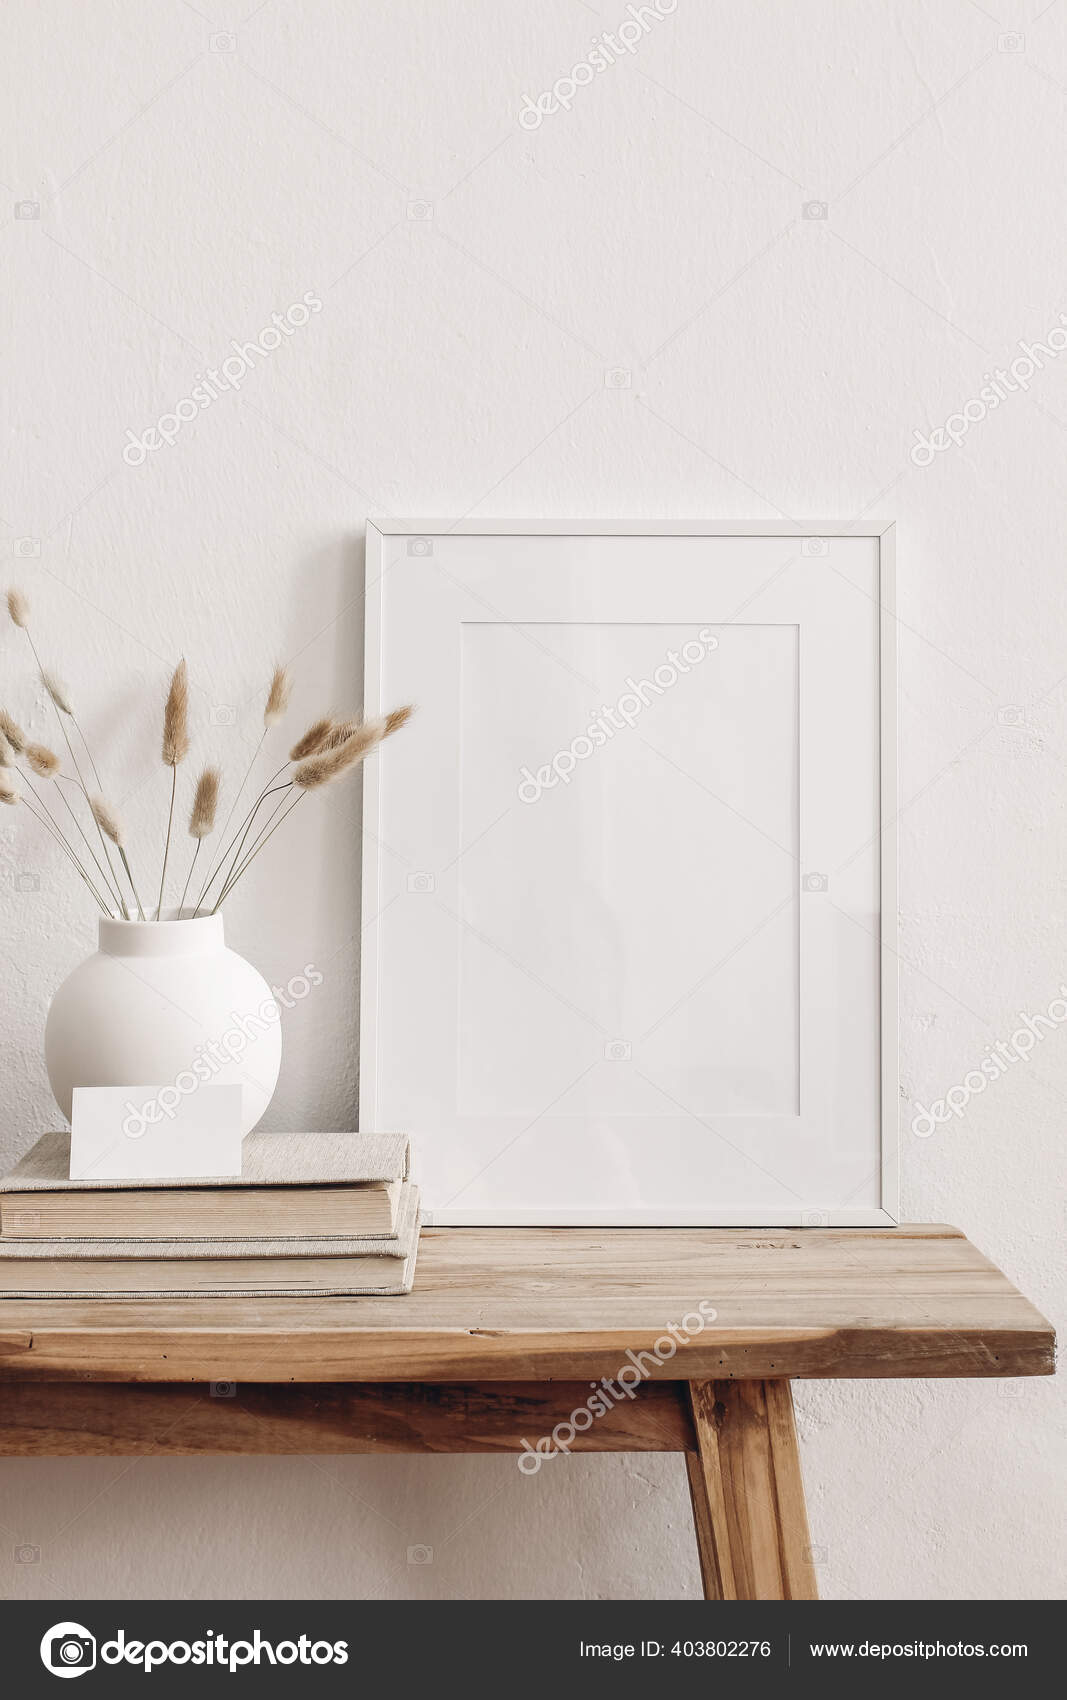 horizontal and vertical white frame mockup collection wooden desk mockup